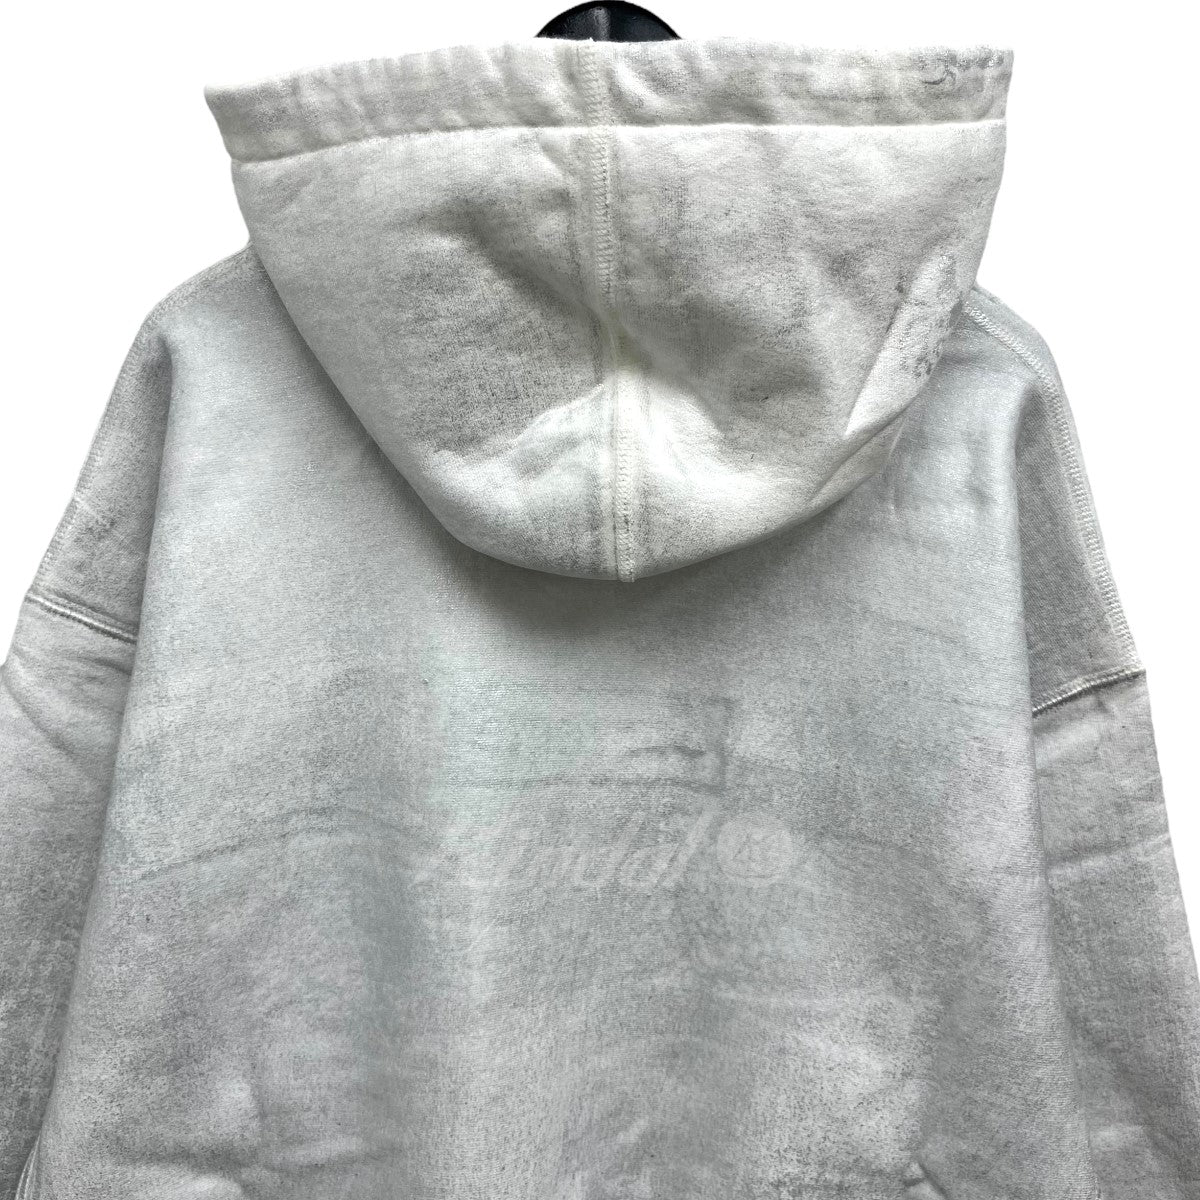 SUPREME (シュプリーム エムエムシックス) ｢Foil Box Logo Hooded Sweatshirt White｣ ボックスロゴパーカー